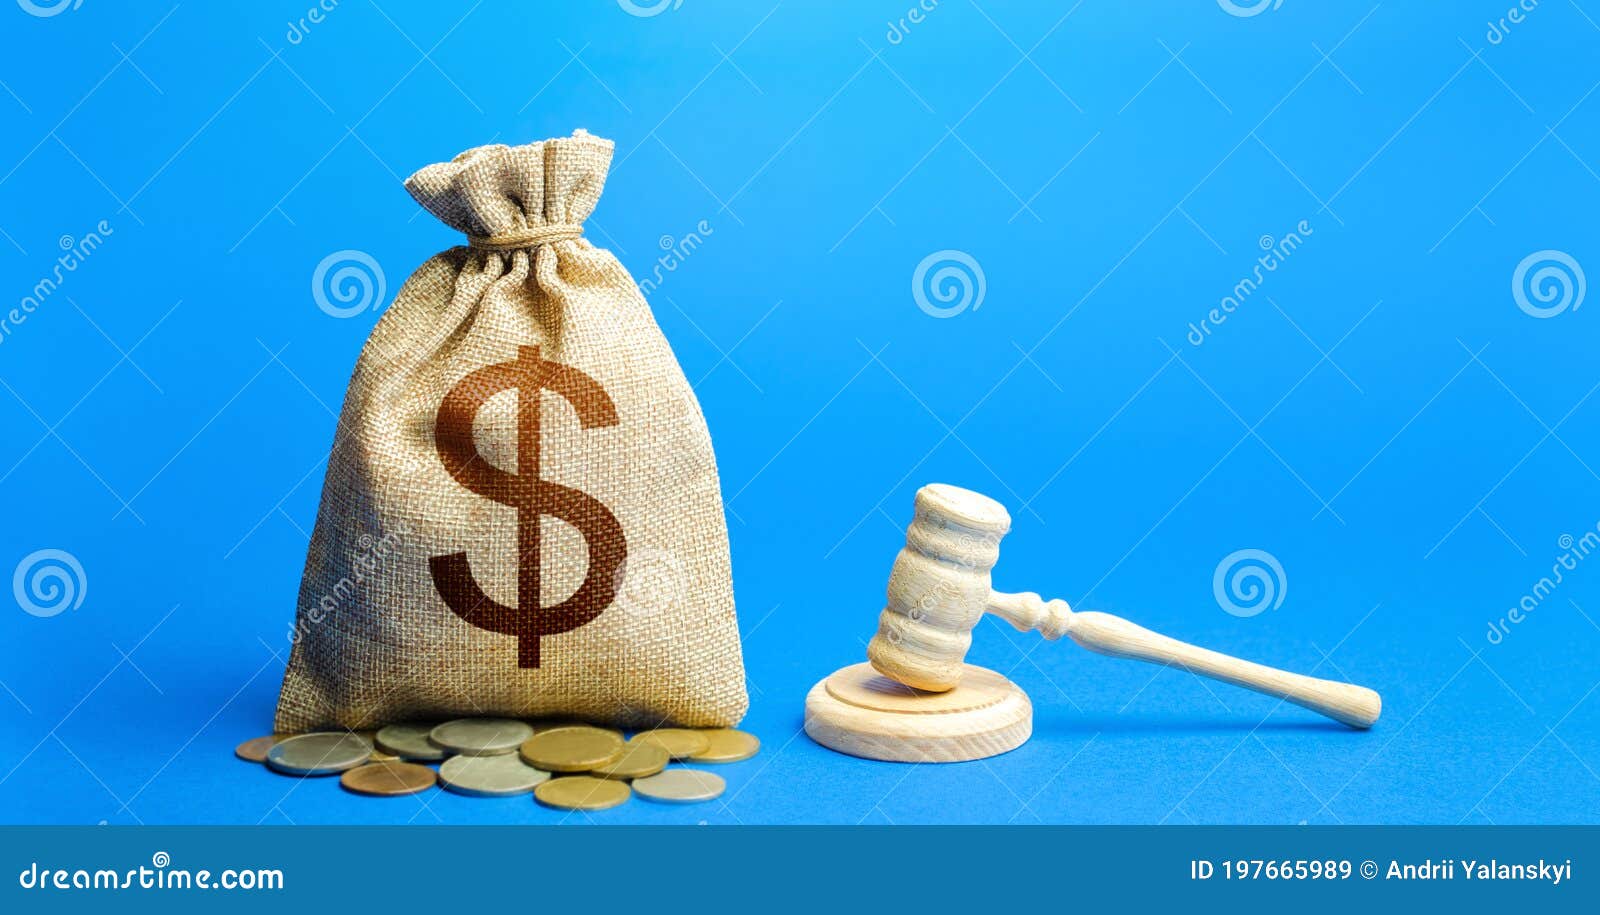 dollar money bag and judge`s gavel. litigation, dispute resolution, conflict of interest settlement. awarding moral financial